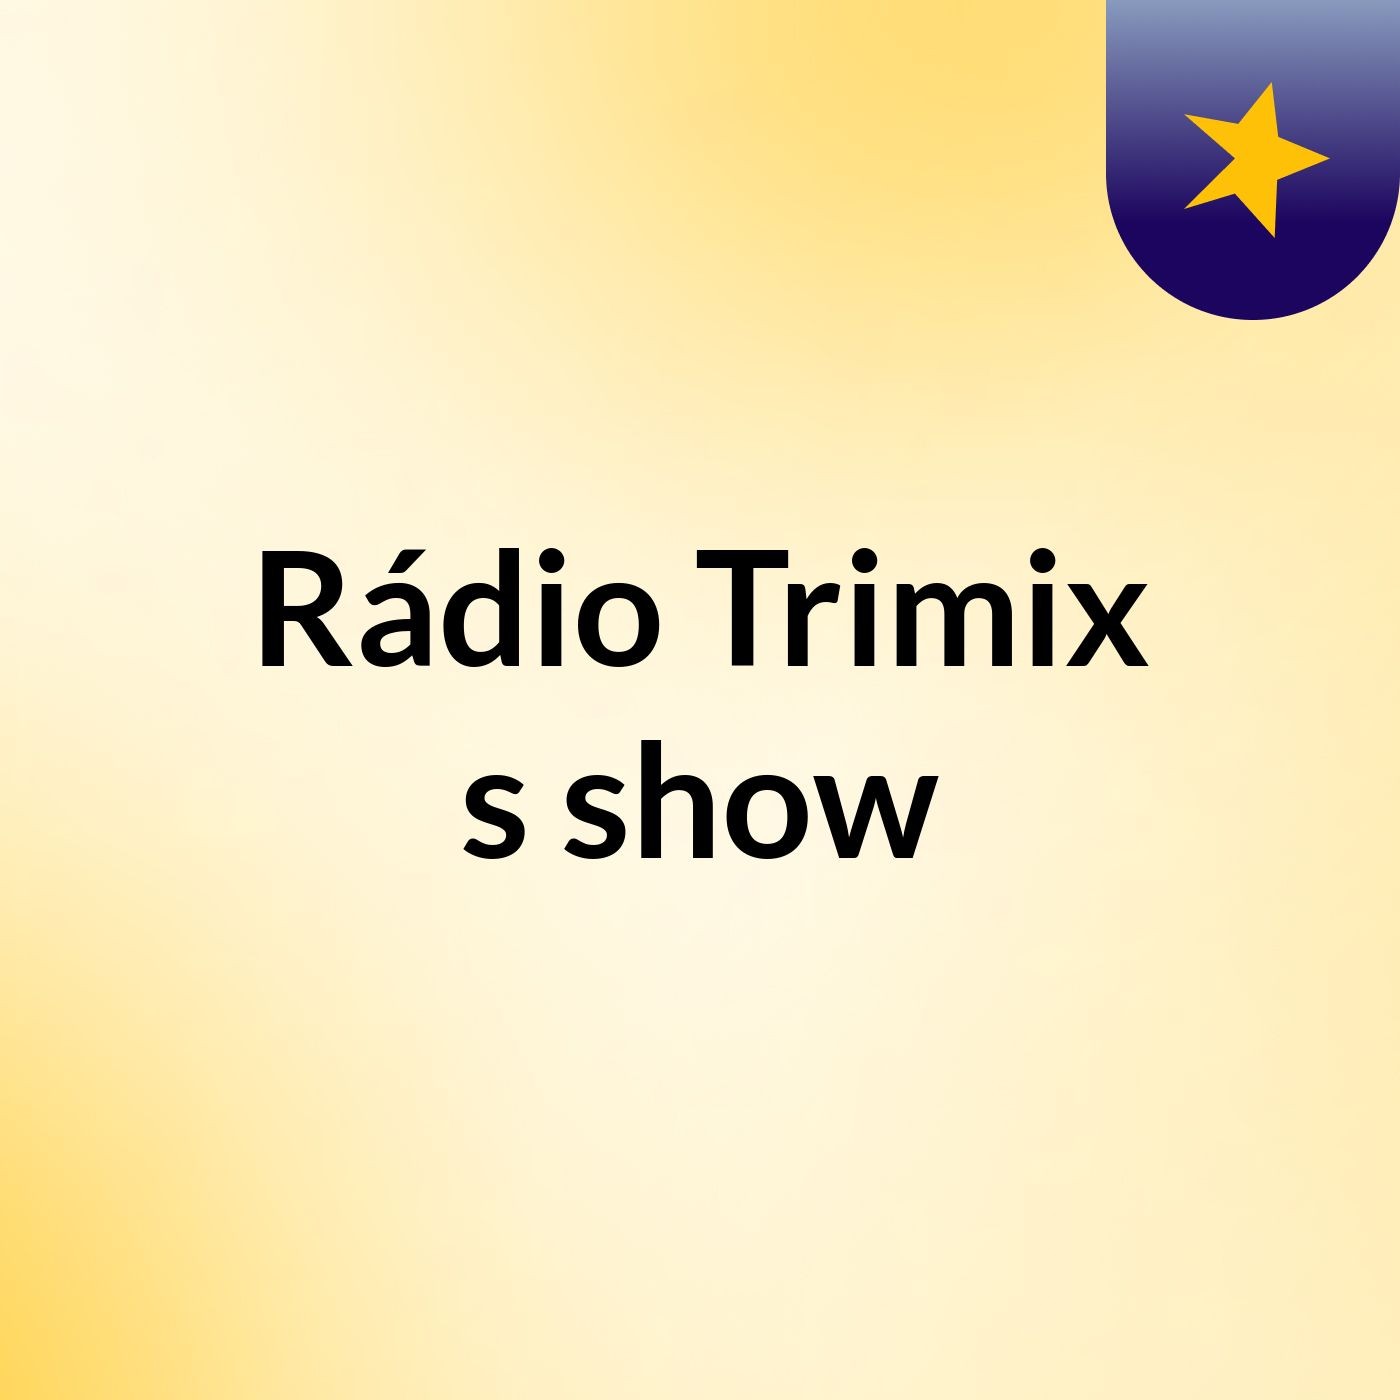 Rádio Trimix's show